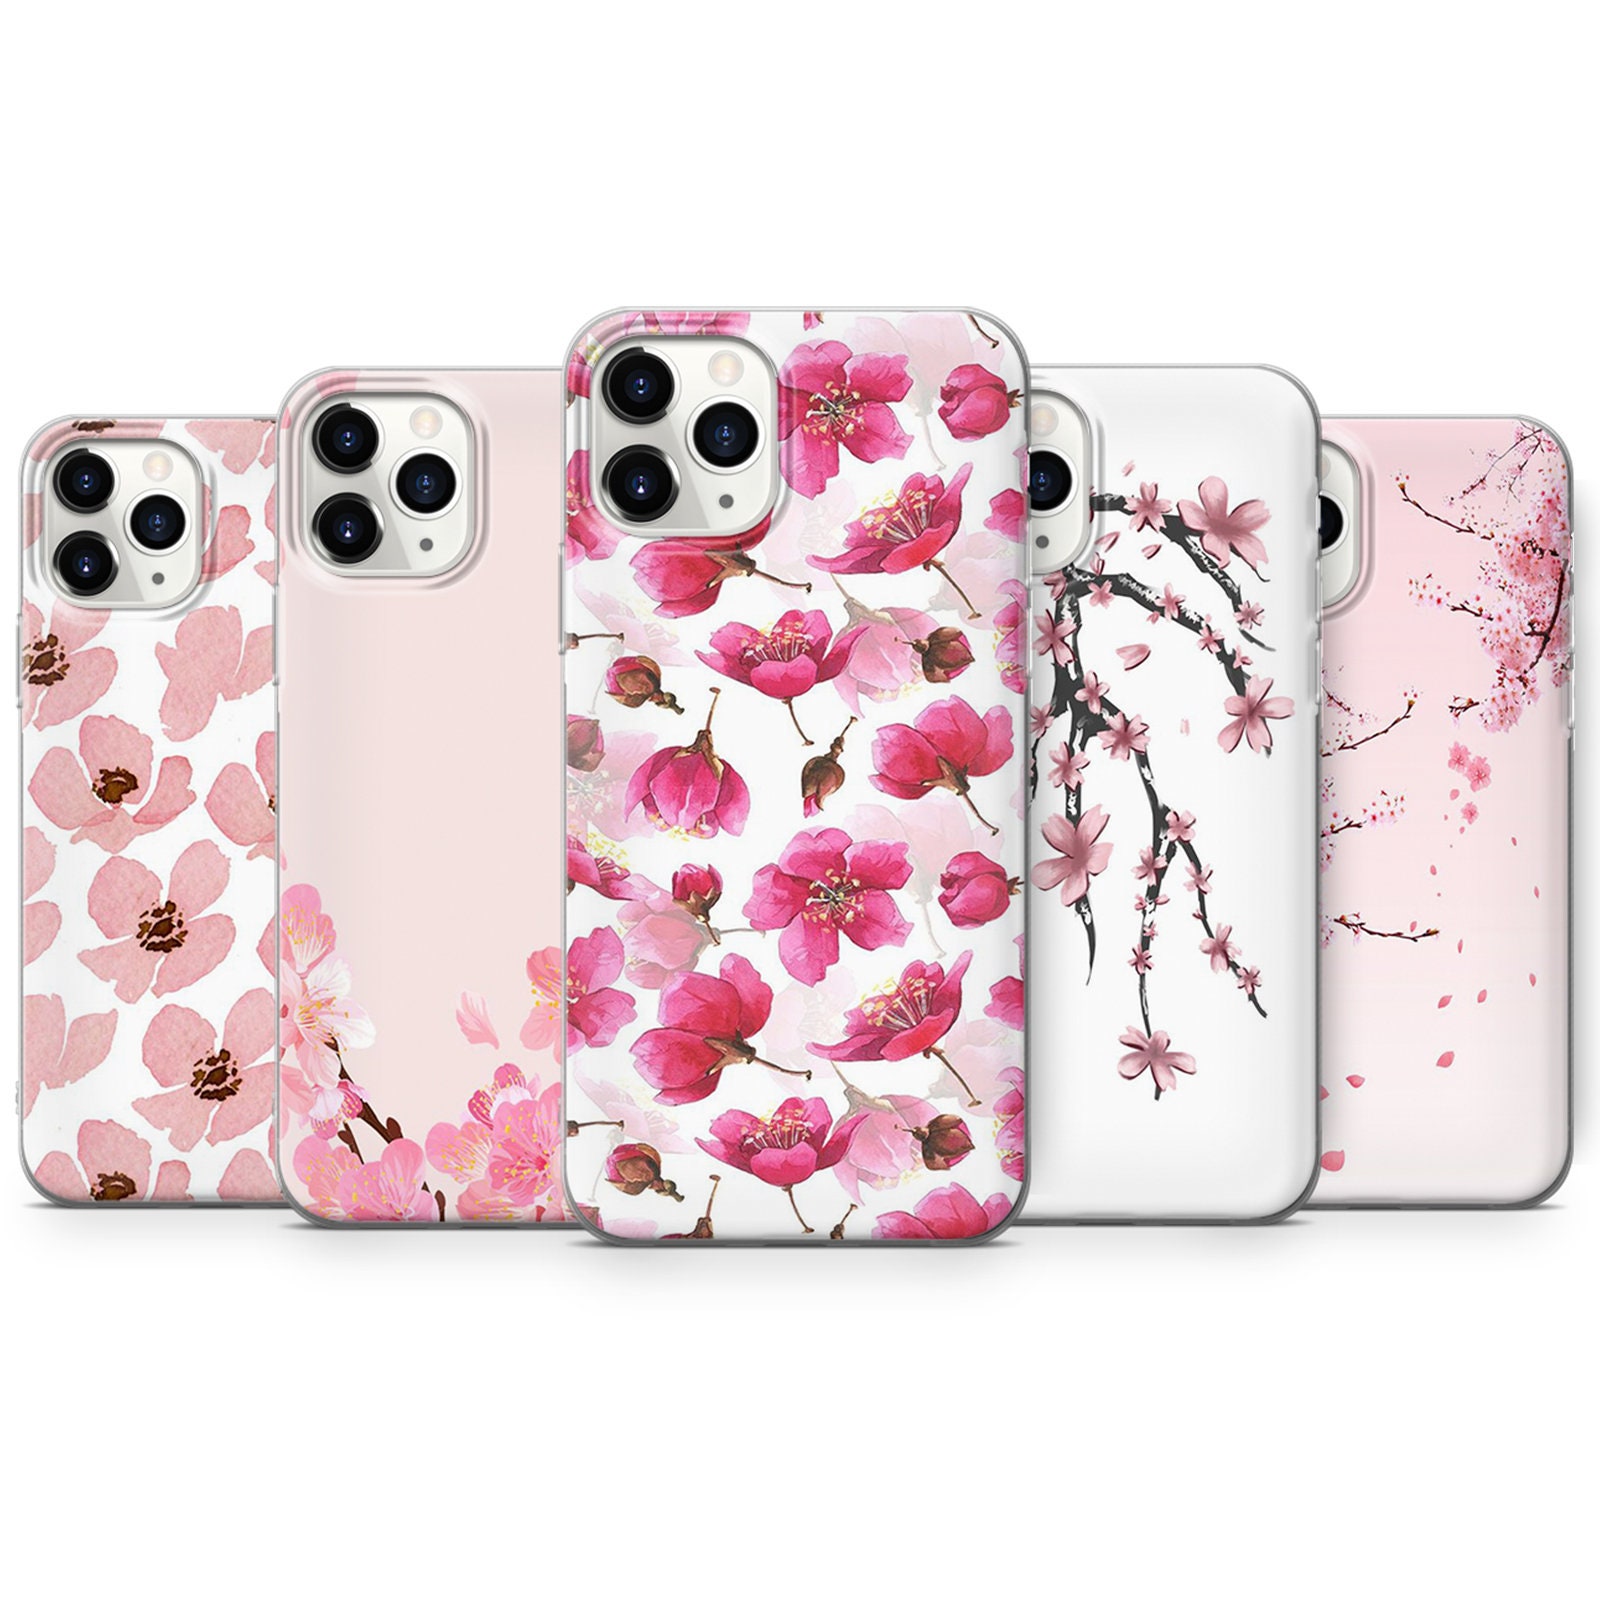 Kawaii Phone case Cherry Blossom Phone Case for All iPhone iPhone 12 Pro Max 12 Pro 11 Pro Max 11 Pro 11 iPhone XS Max XS X 8 7 6 6S Plus